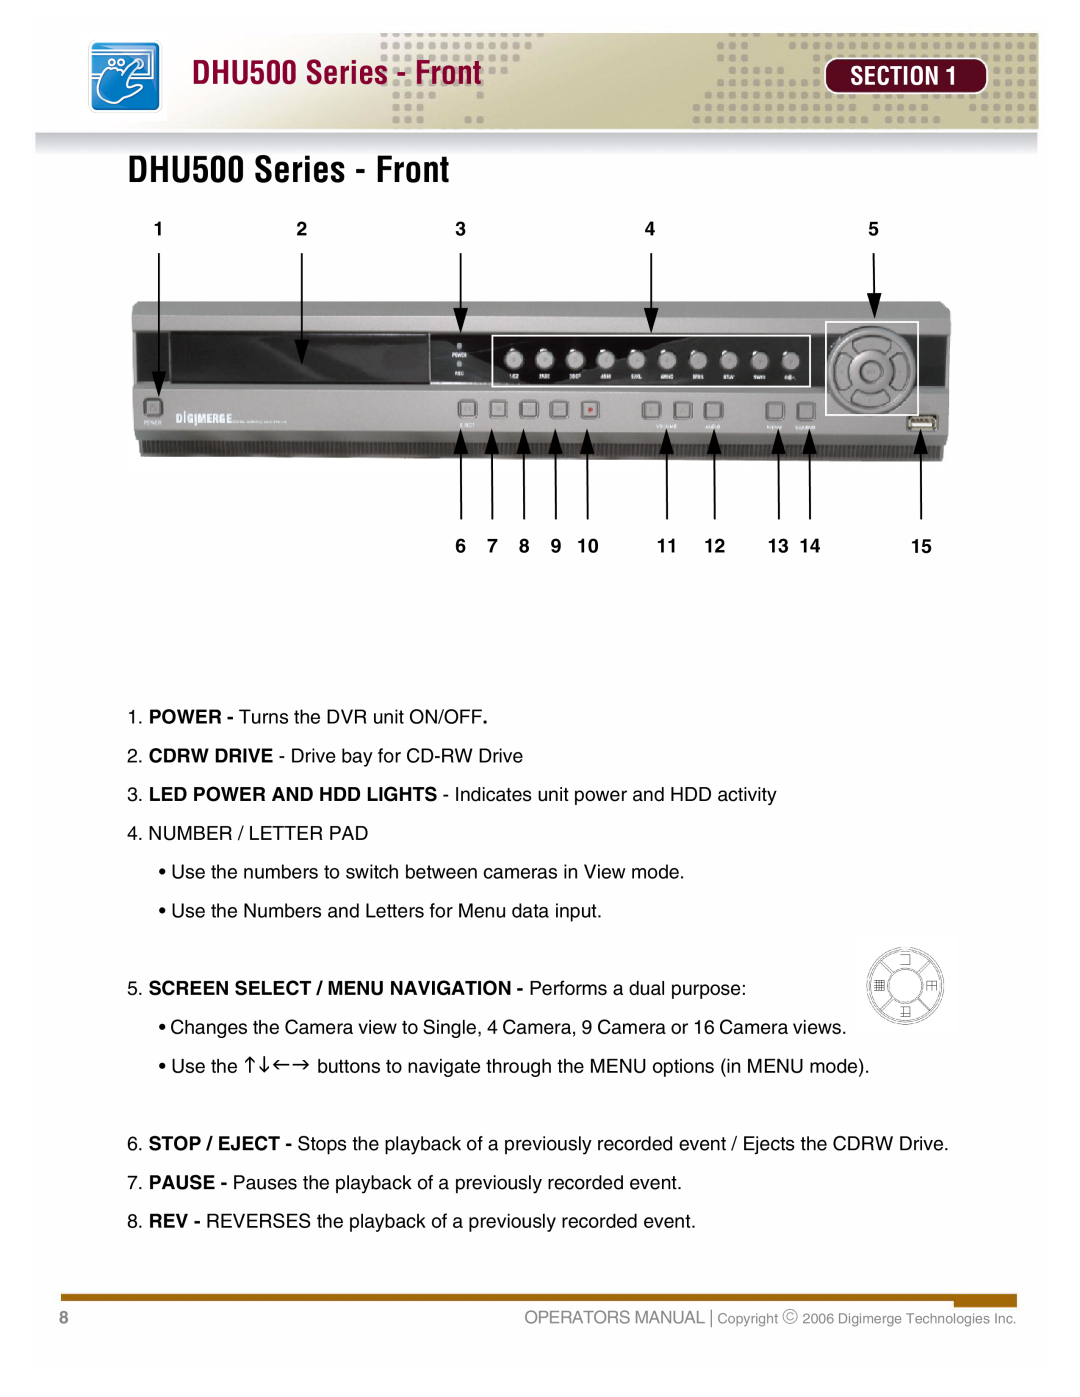 LOREX Technology manual DHU500 Series - Front, Section, SCREEN SELECT / MENU NAVIGATION - Performs a dual purpose 